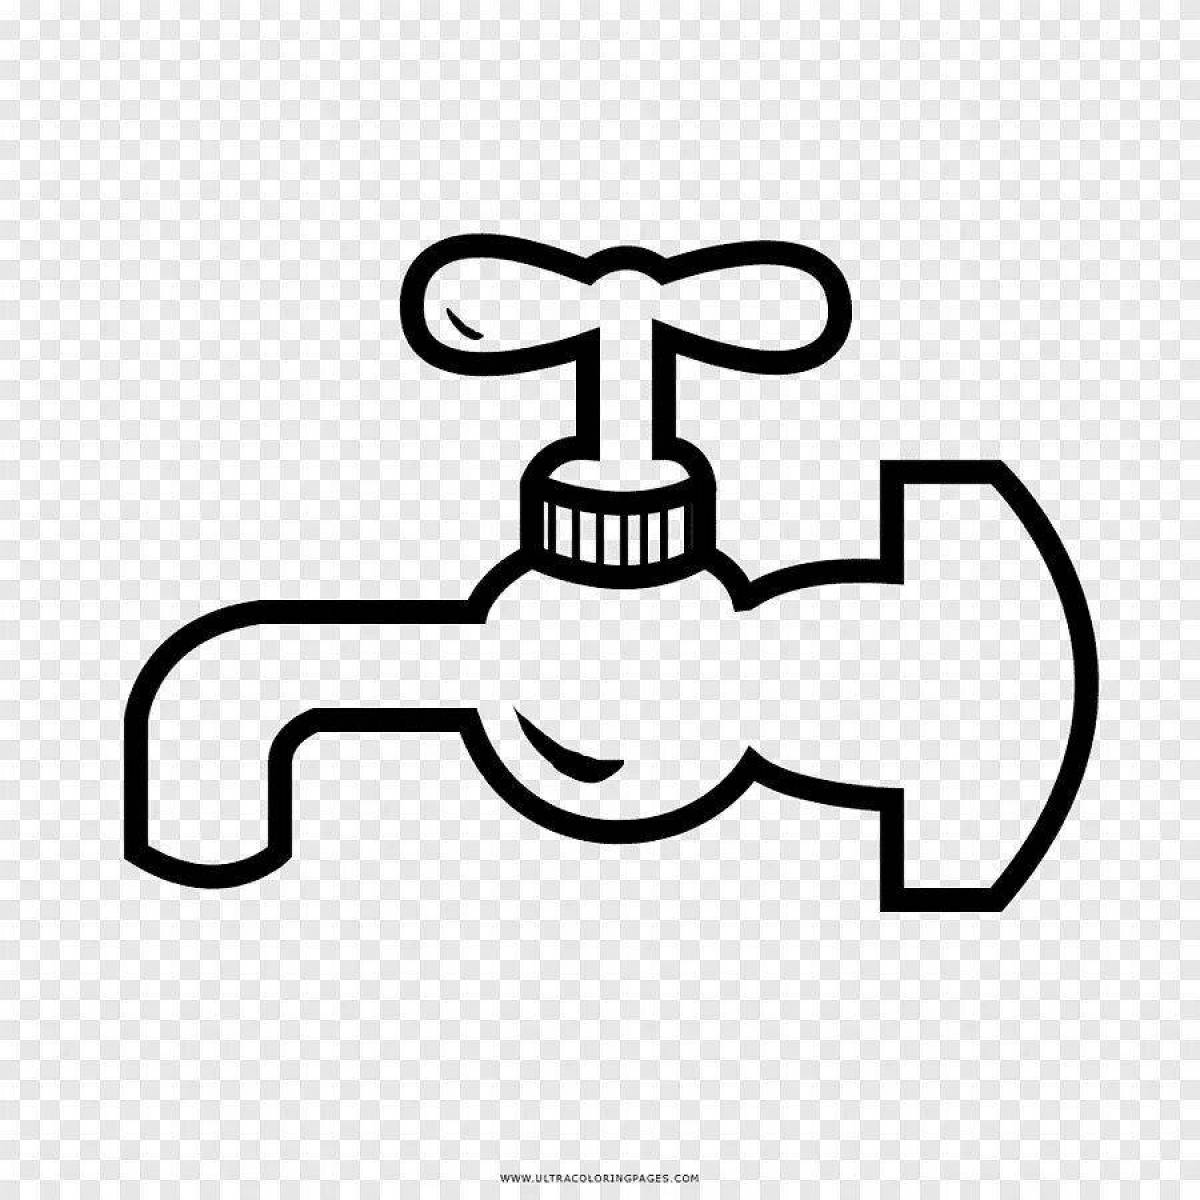 Water faucet #5